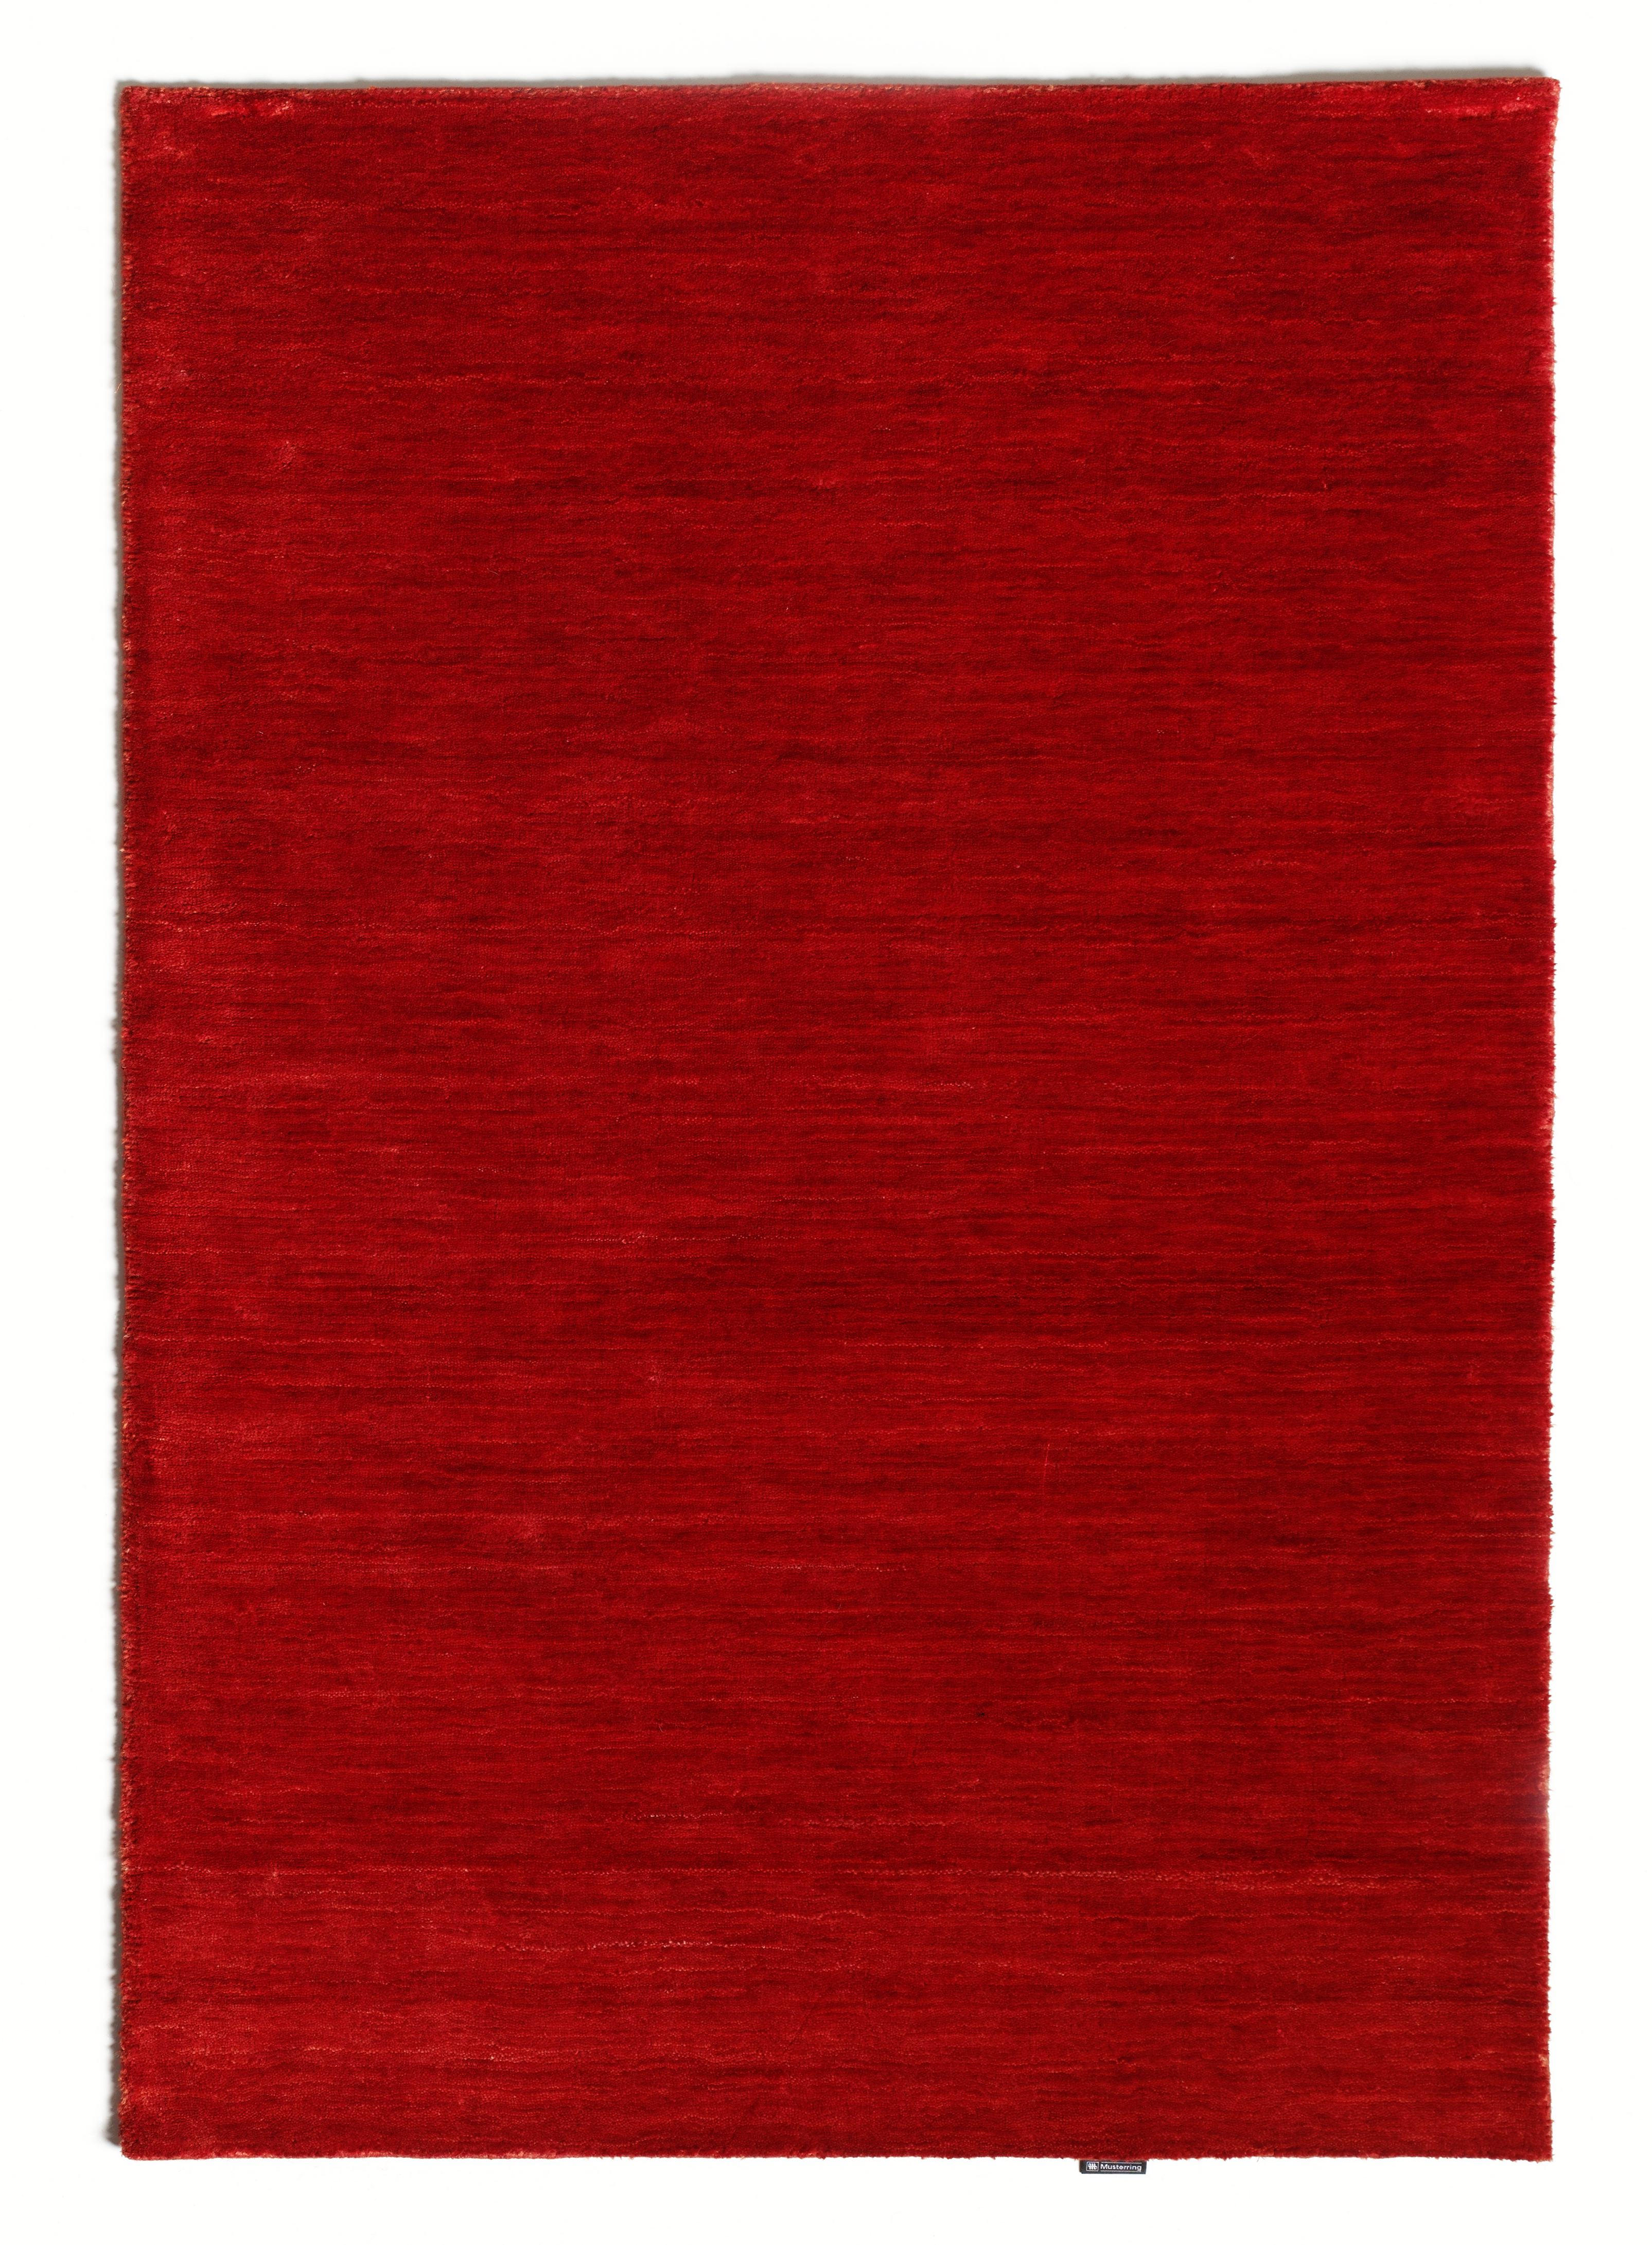 ORIENTTEPPICH  Malibu  - Rot, KONVENTIONELL, Textil (200/300cm) - Musterring